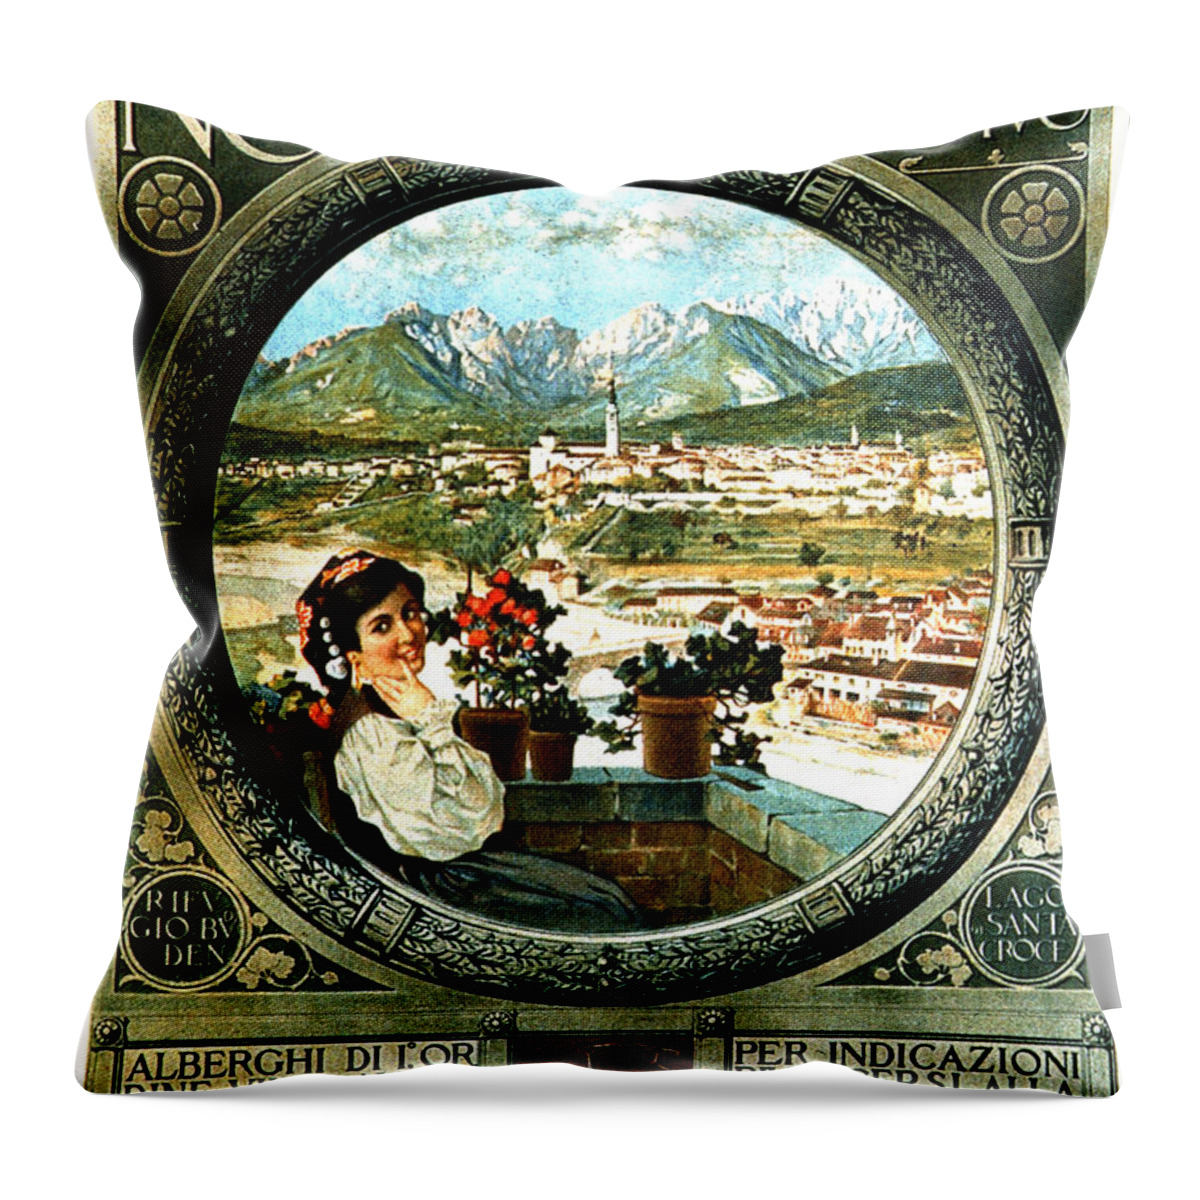 Vintage Throw Pillow featuring the mixed media Belluno, Italy - Dolomites - Vintage Italian Travel Poster by Studio Grafiikka